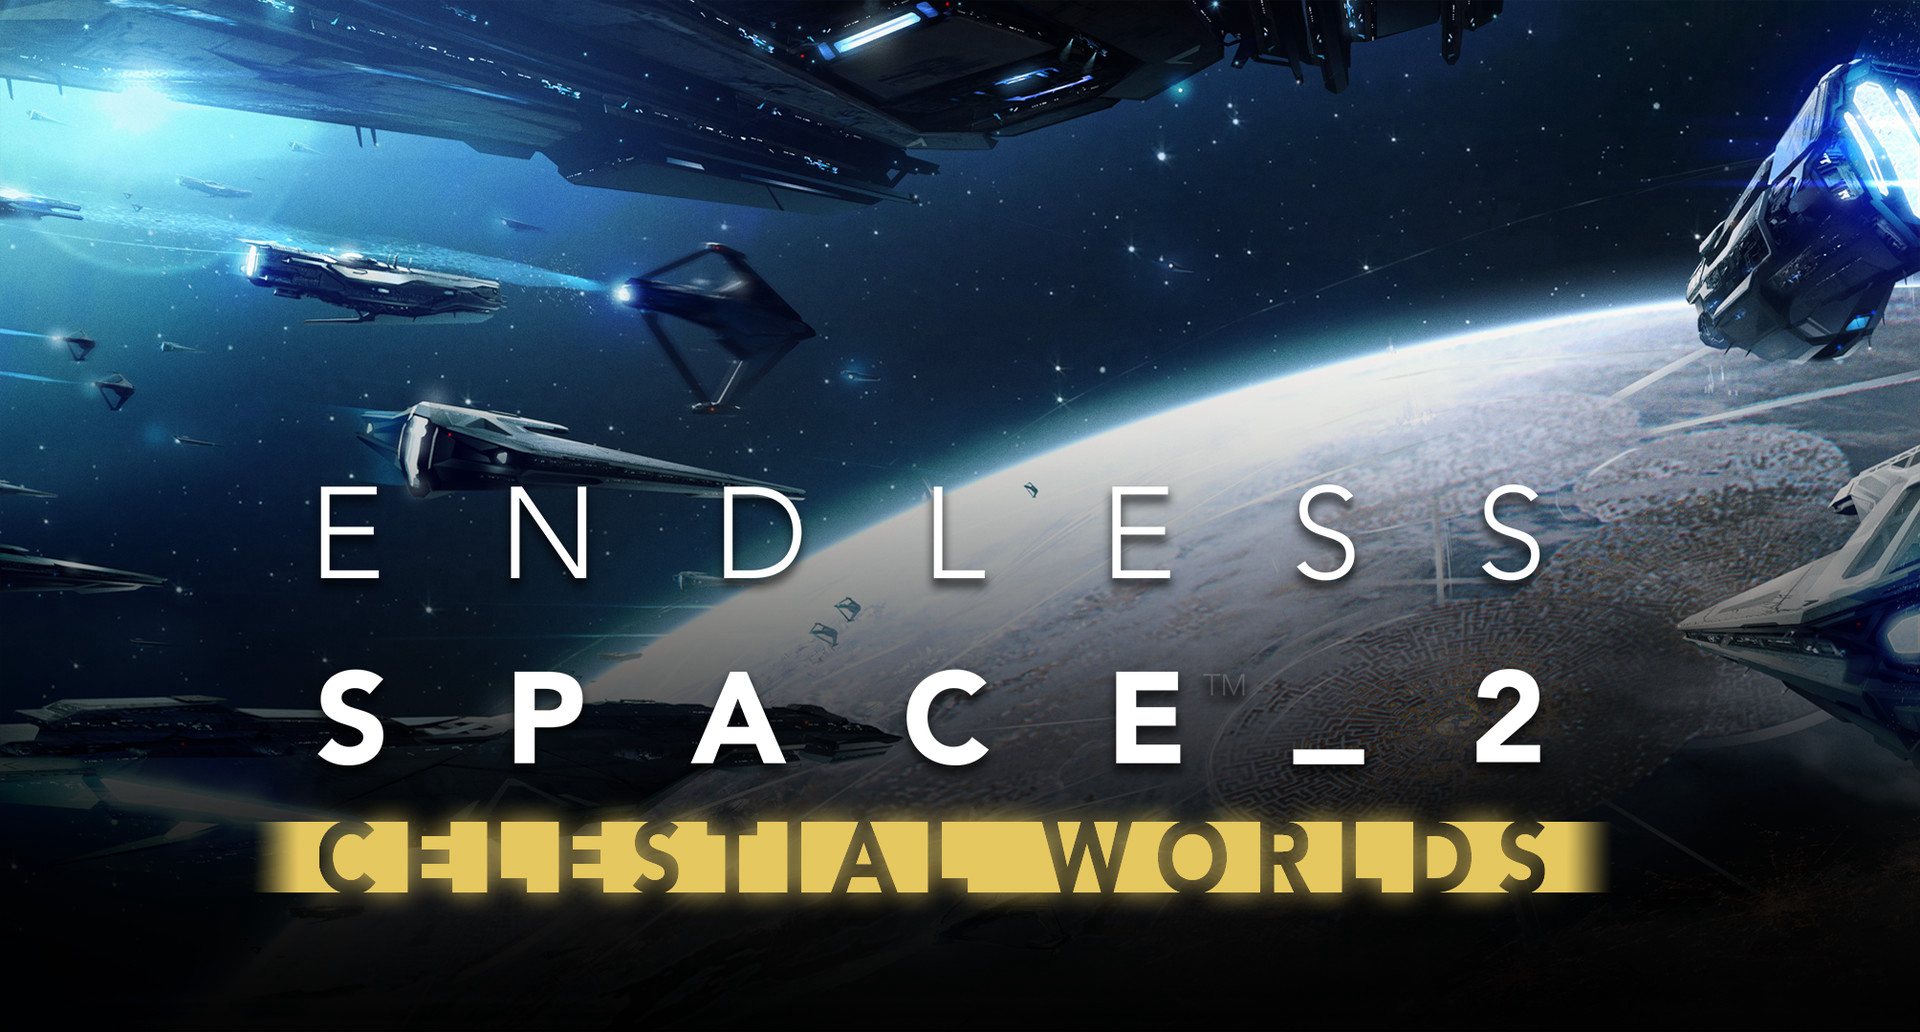 Endless Space 2 - Celestial Worlds DLC Steam CD Key, $2.2